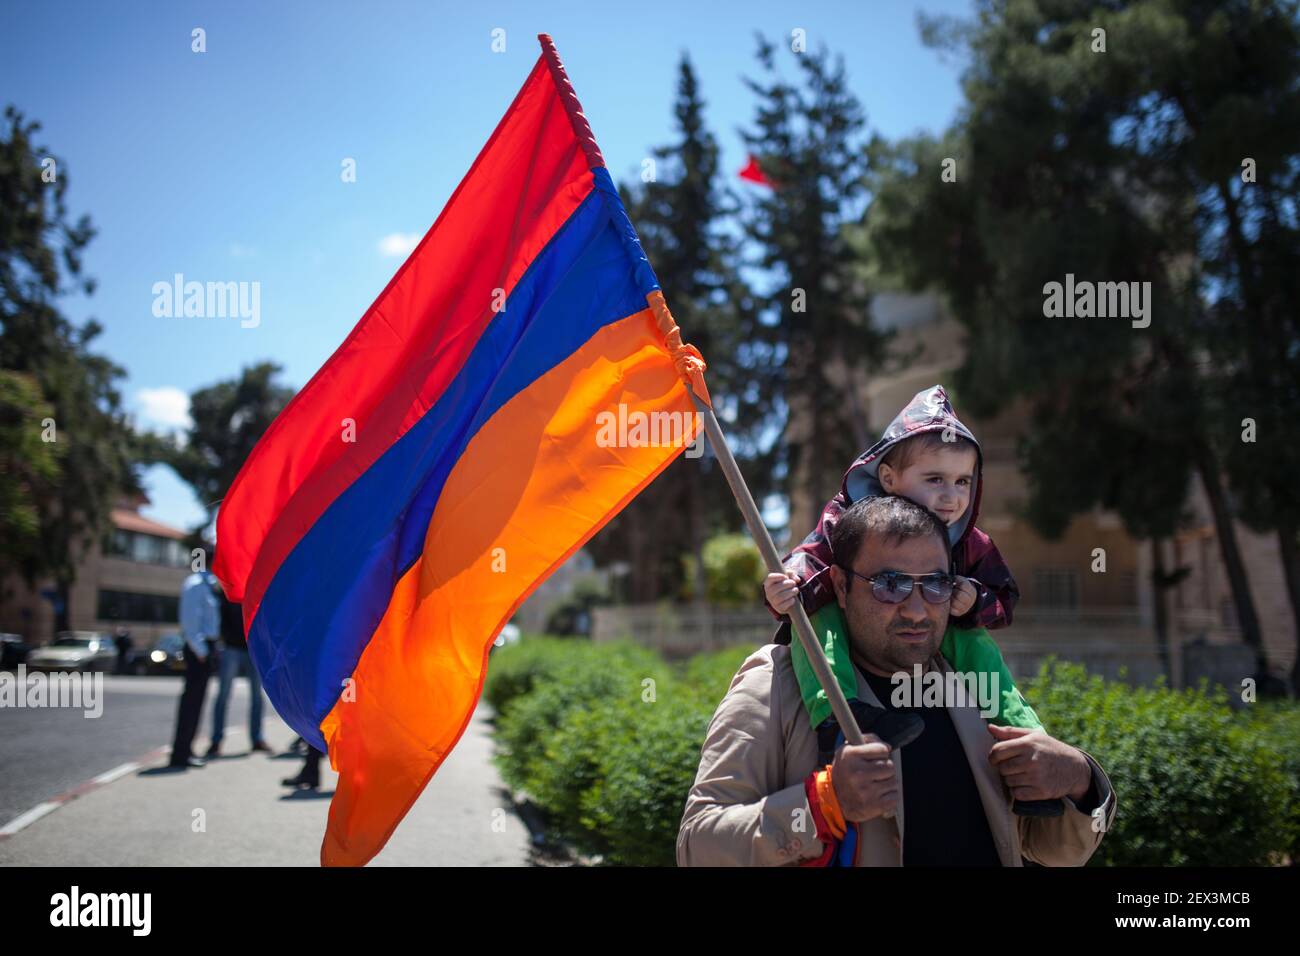 Население армении на сегодня. Население Армении. Республика Армения население. Жители Еревана армяне. Русские в Армении.